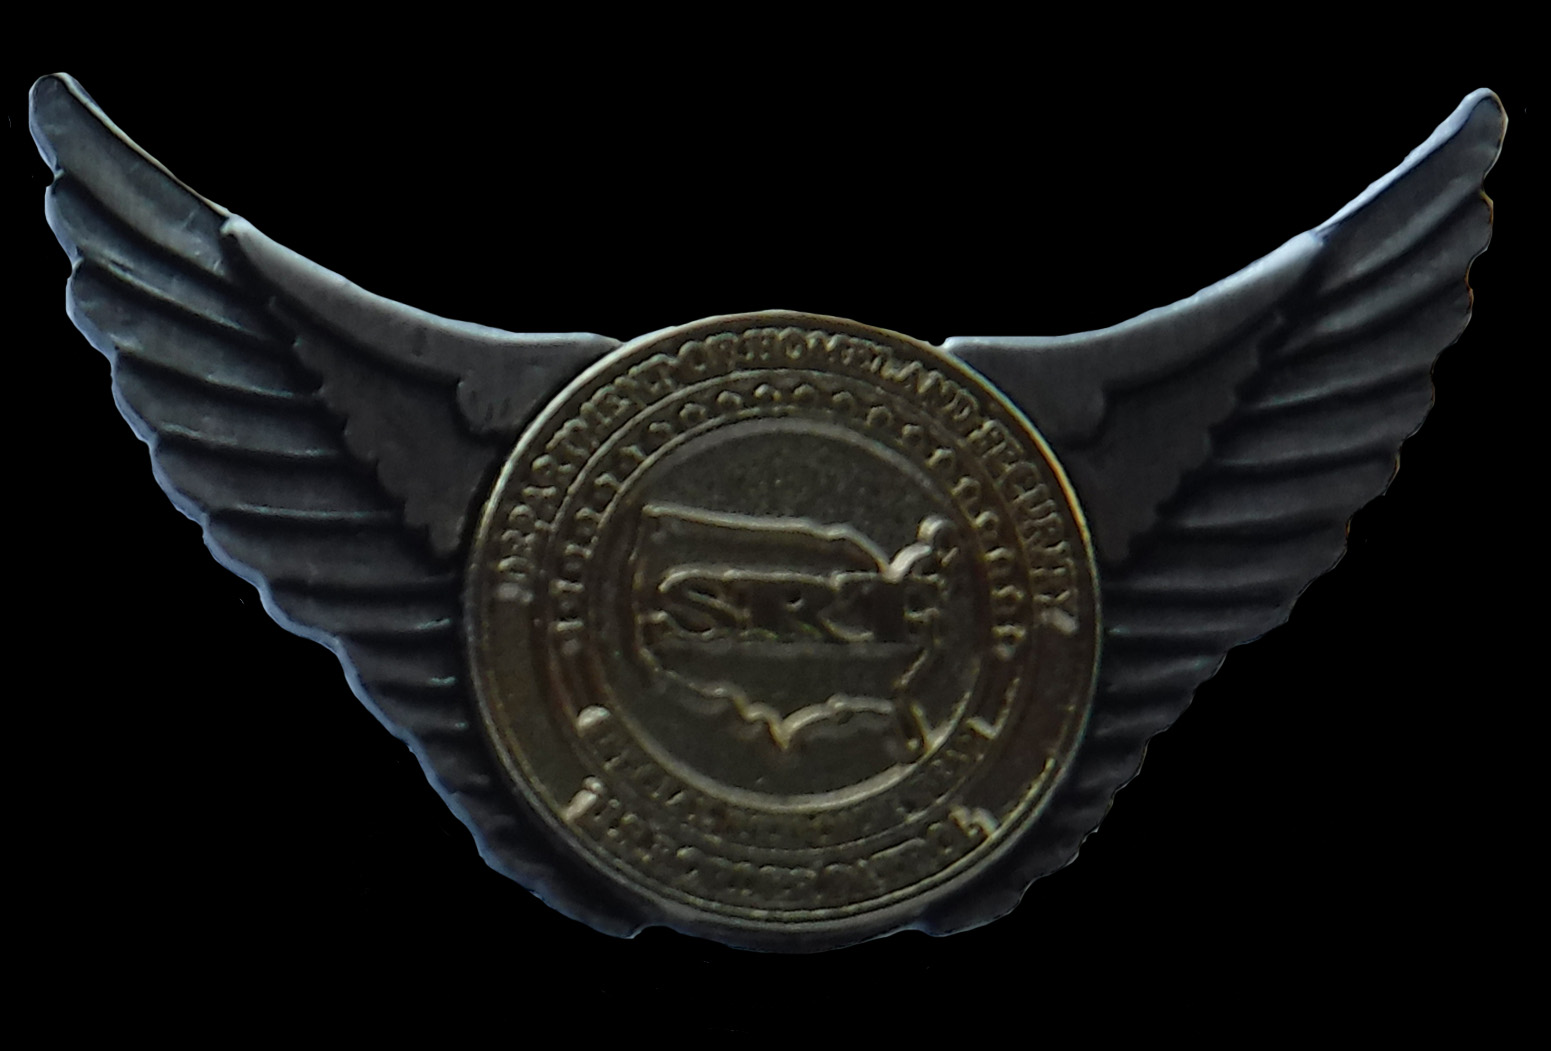 U.S. Border Patrol Special Response Team - lapel pin